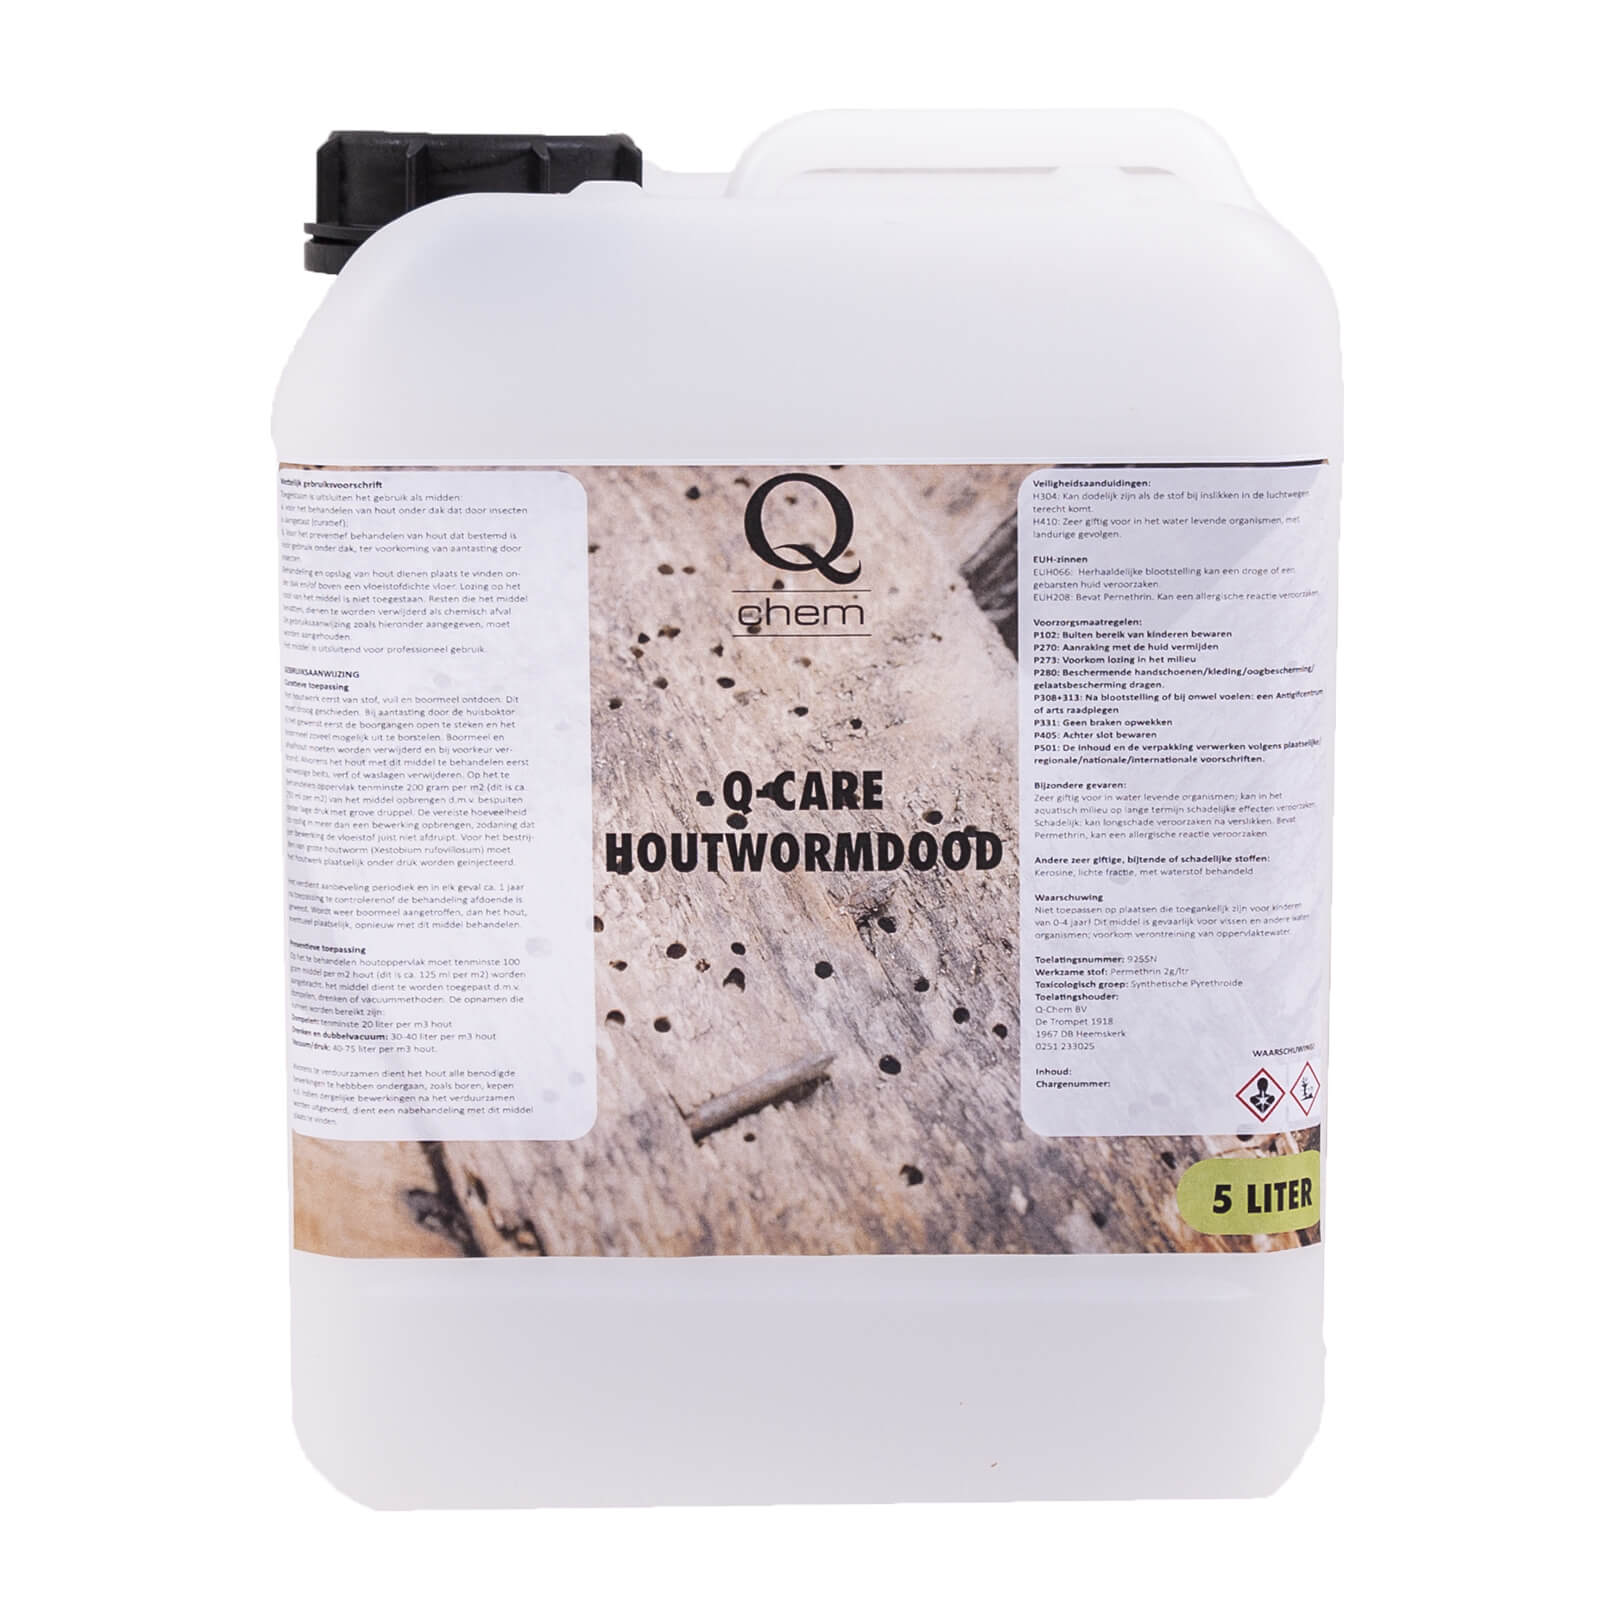 Q-Care Houtwormdood OL 5 Liter